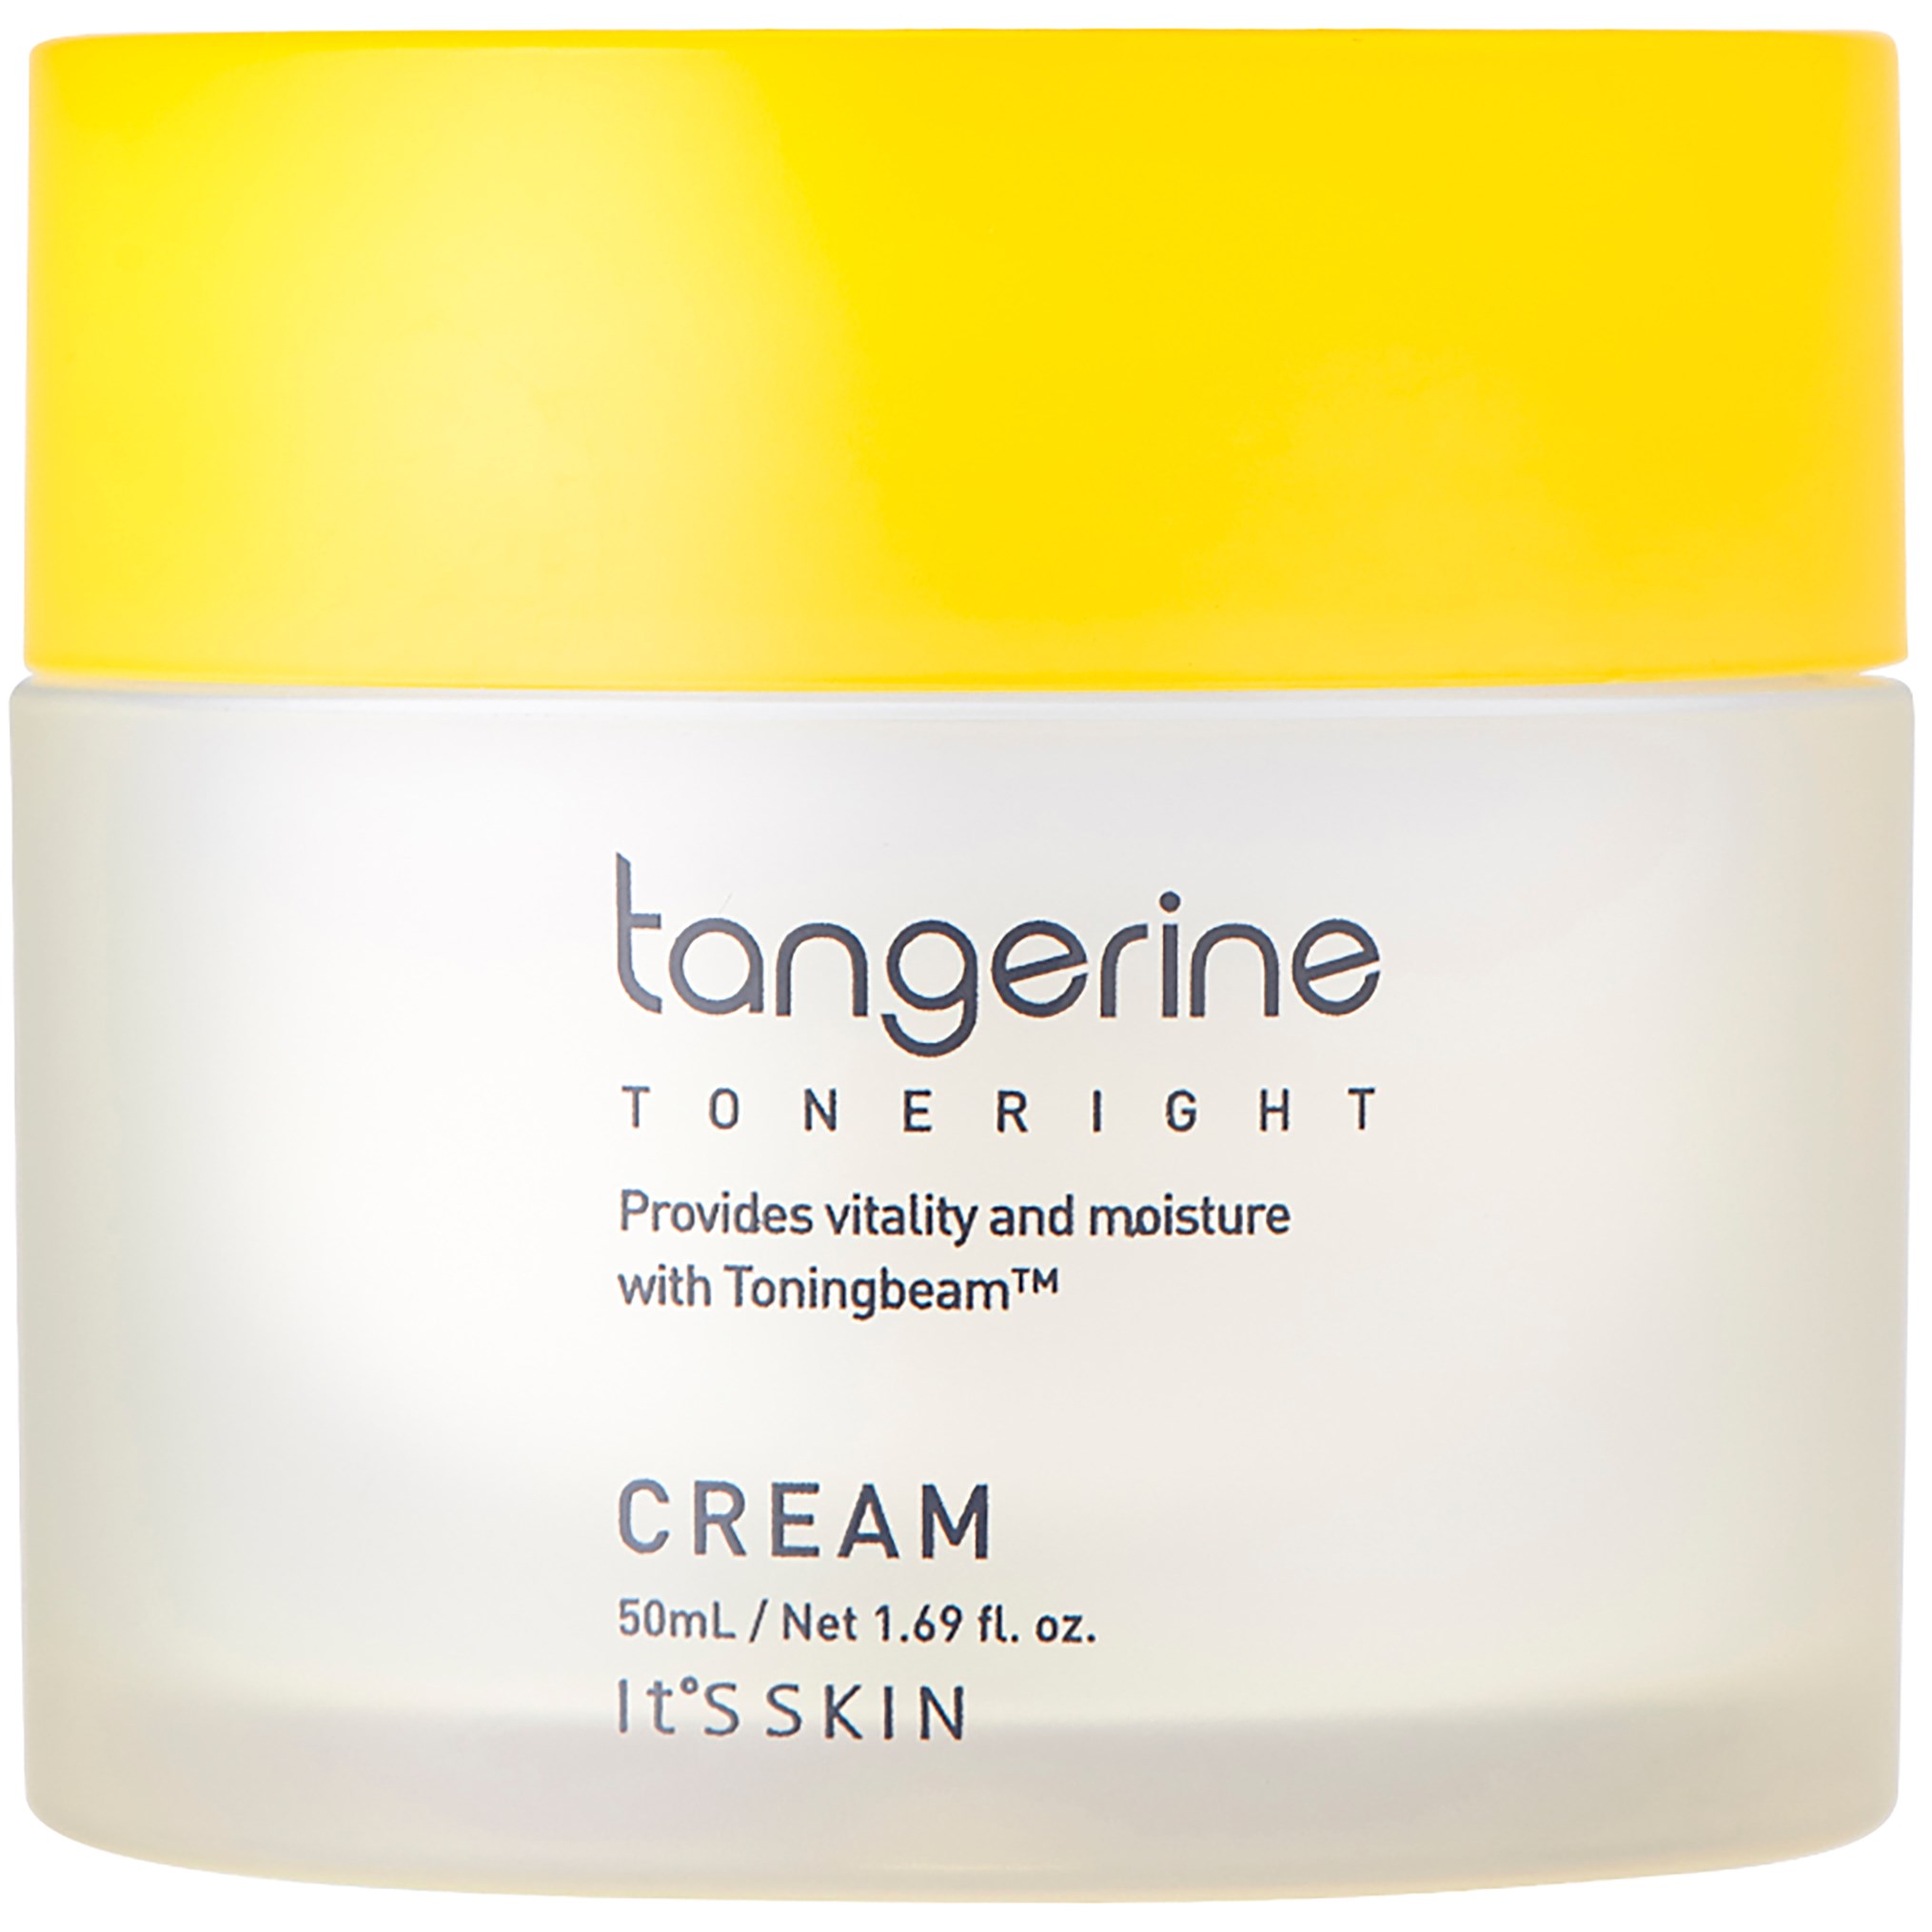 ItS SKIN Tangerine Toneright Cream 50 ml